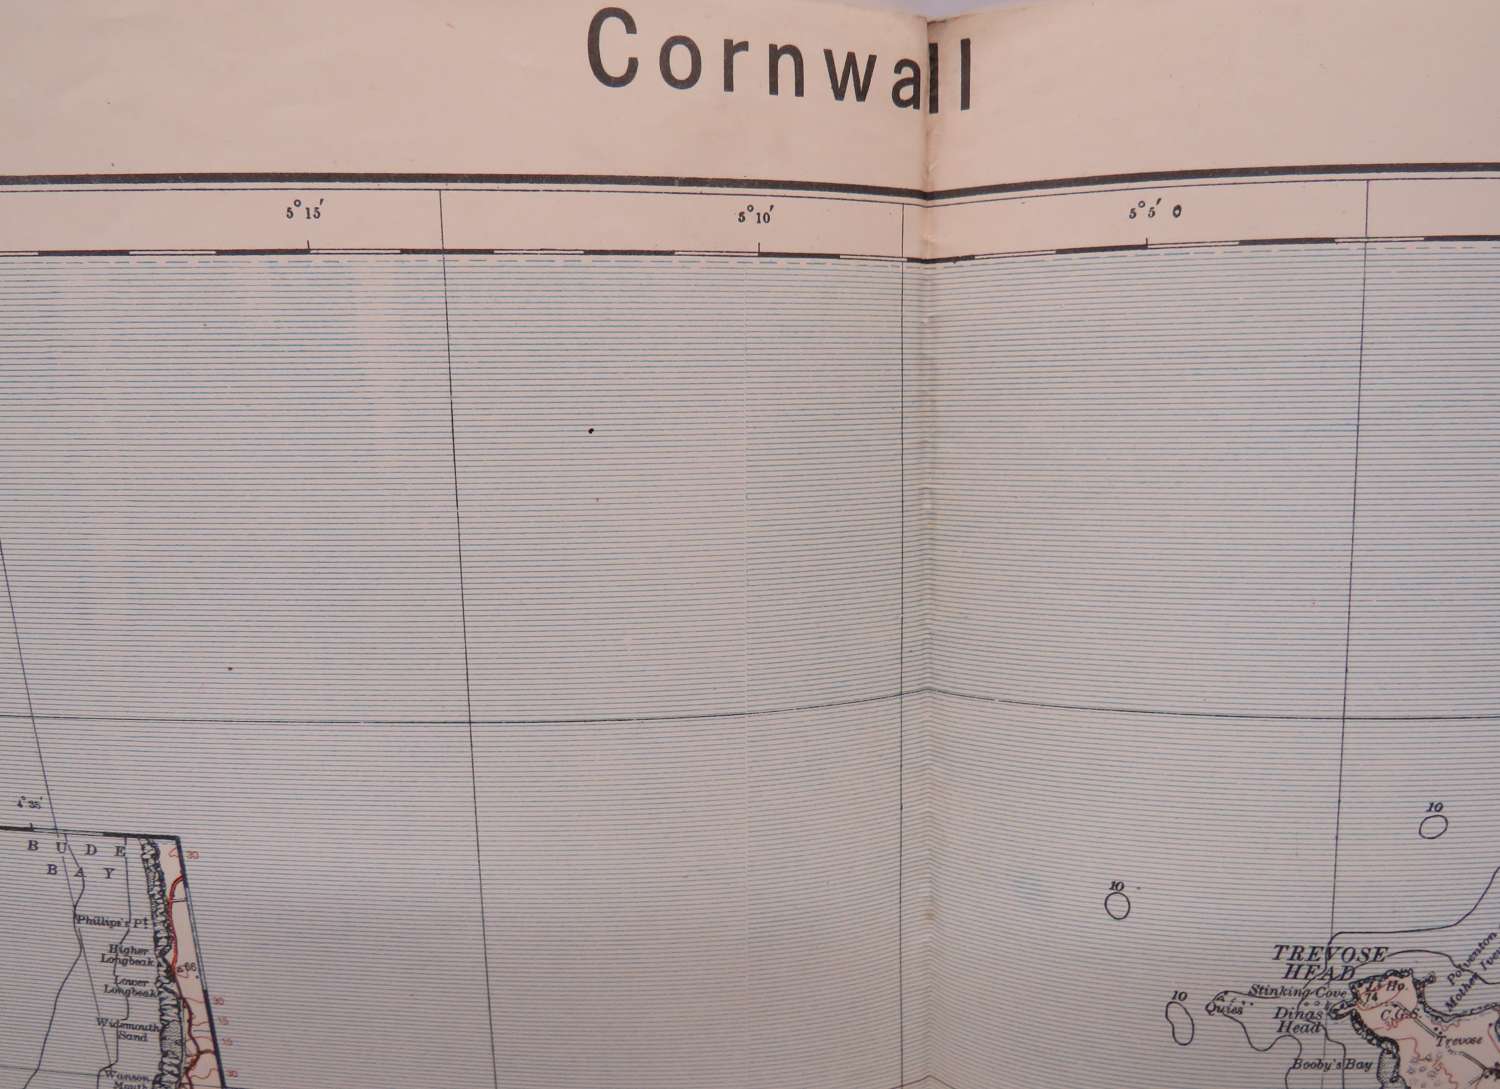 WW 2 German Invasion Map of Cornwall